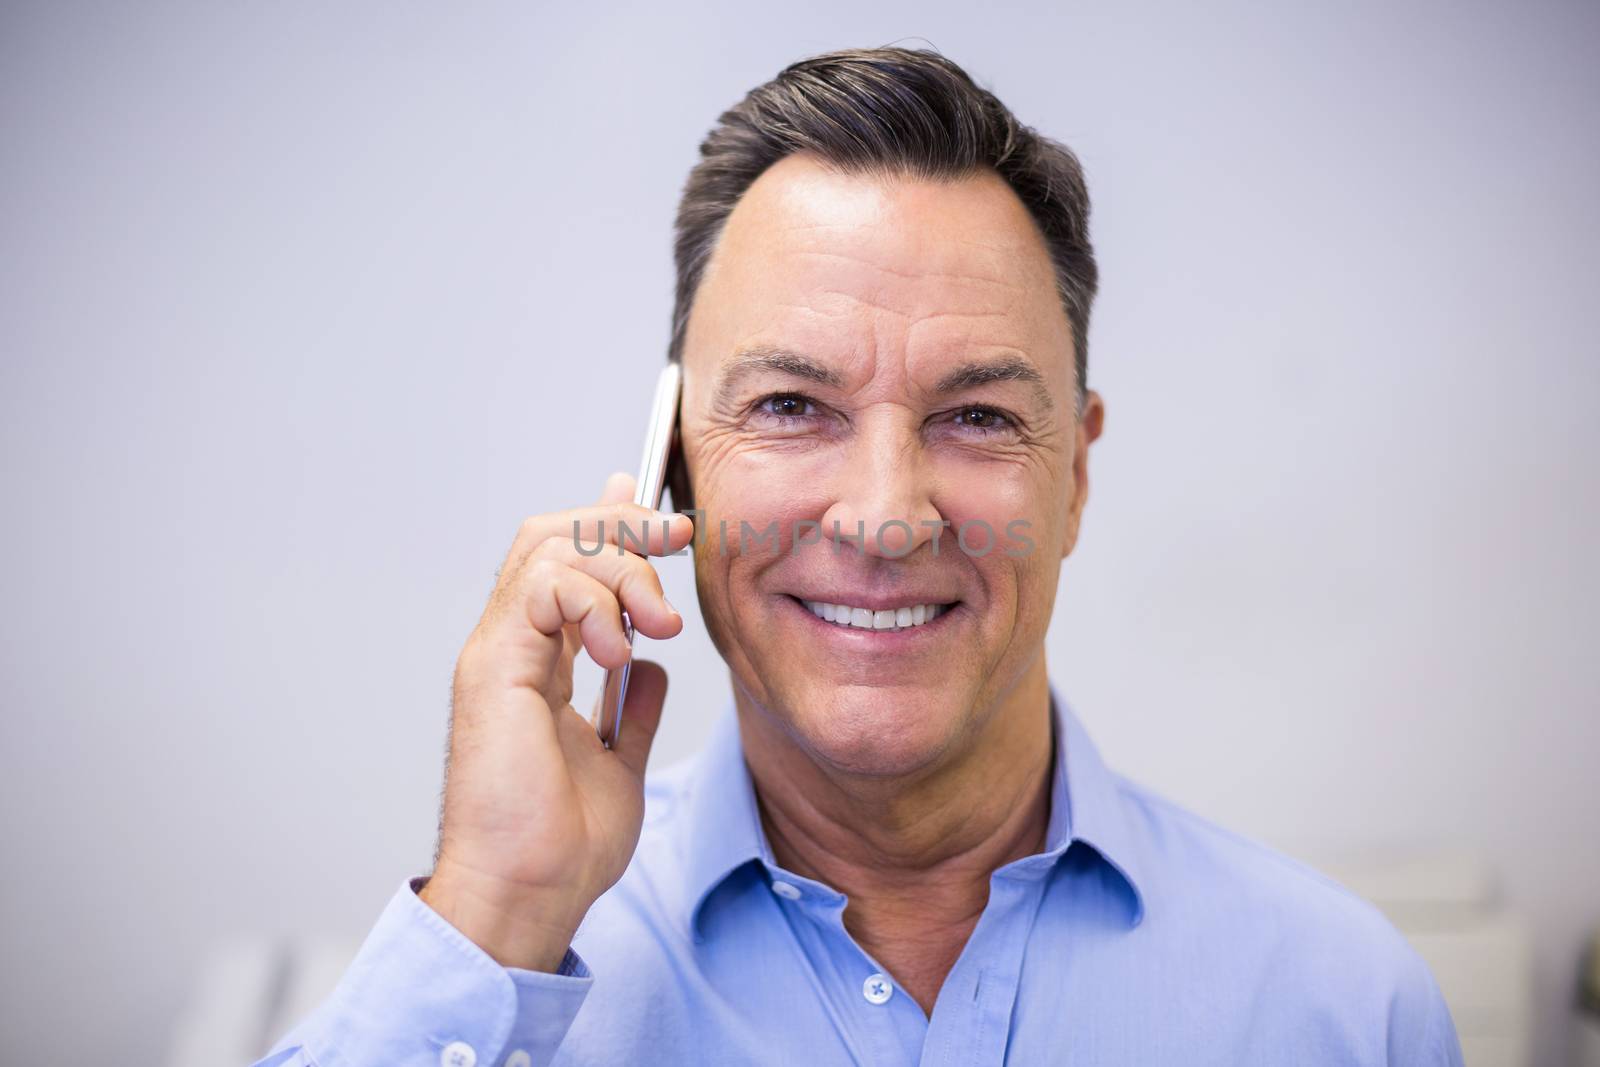 Dentist talking on mobile phone by Wavebreakmedia